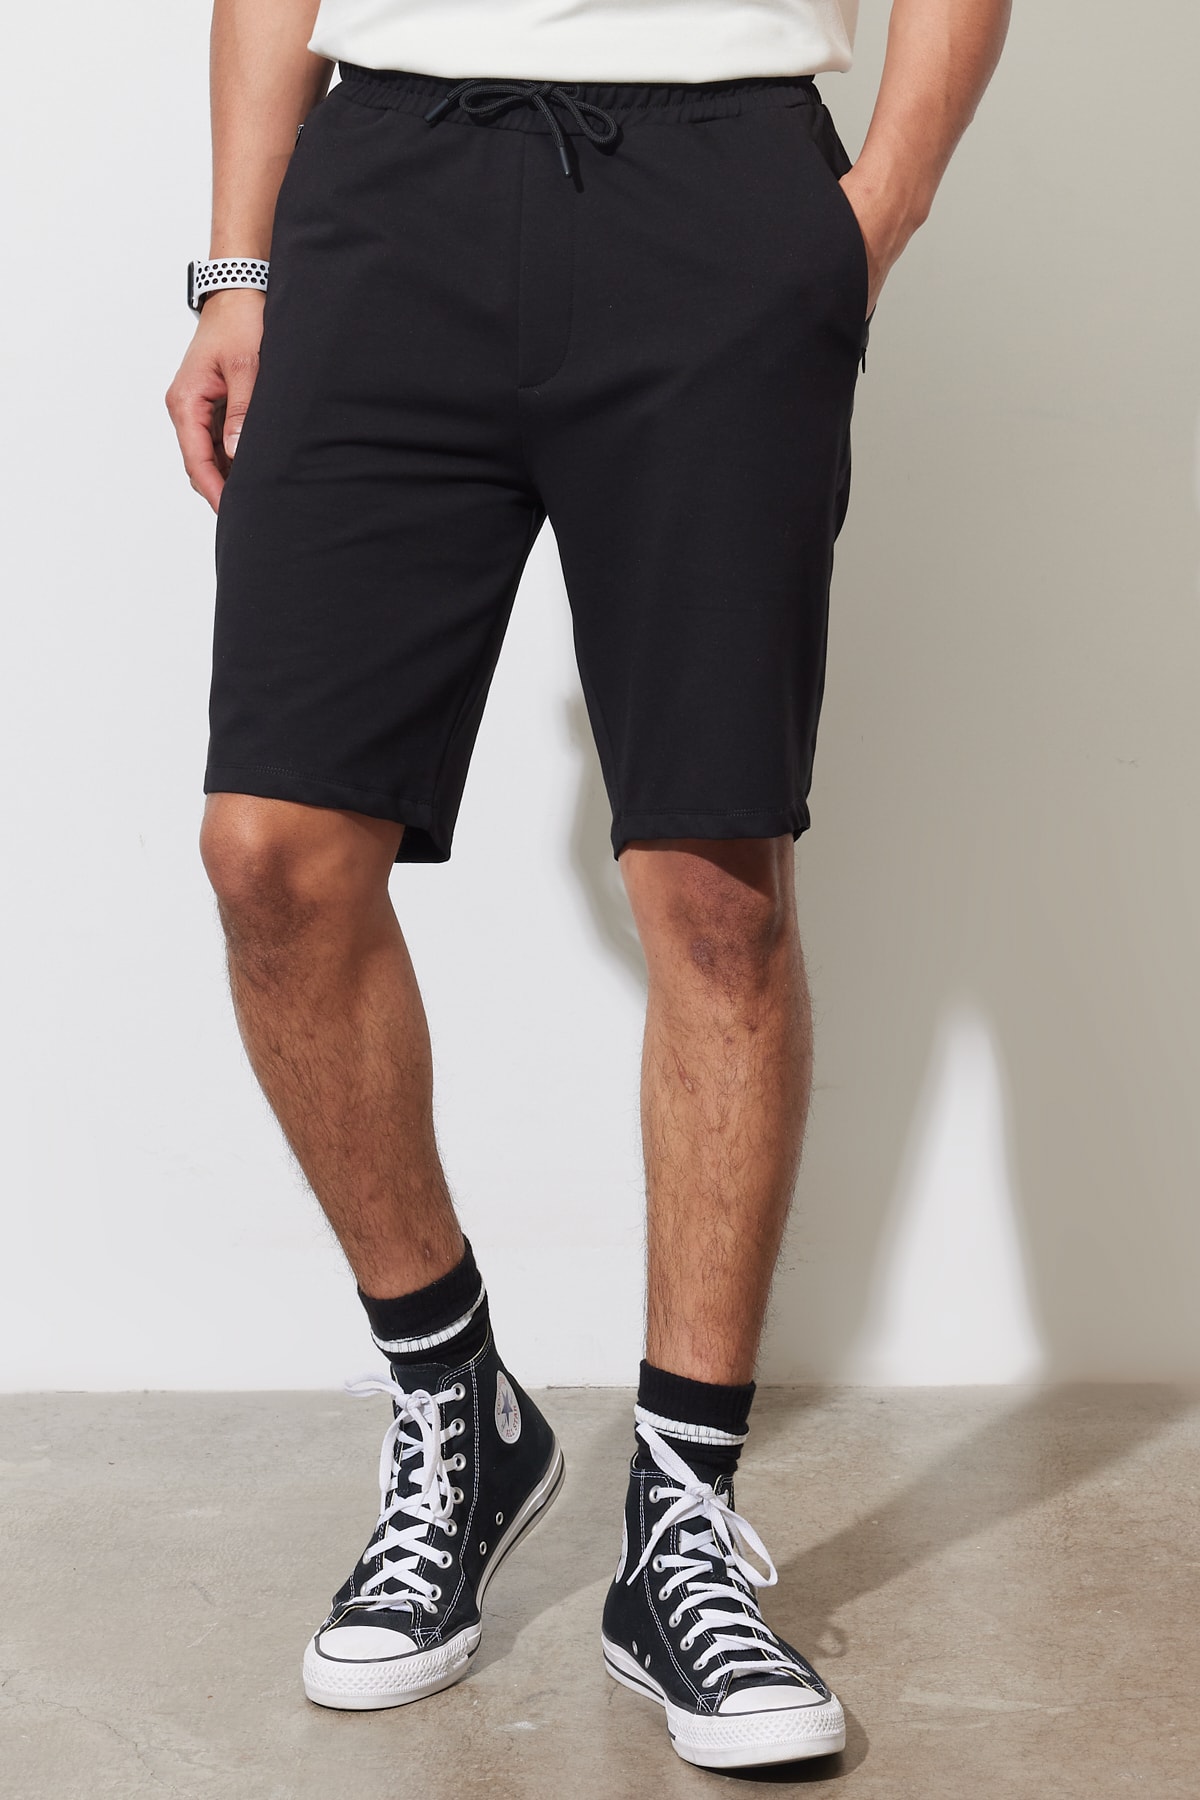 Levně ALTINYILDIZ CLASSICS Men's Black Standard Fit Regular Cut, Pocket Pocket Cotton Knitted Shorts.